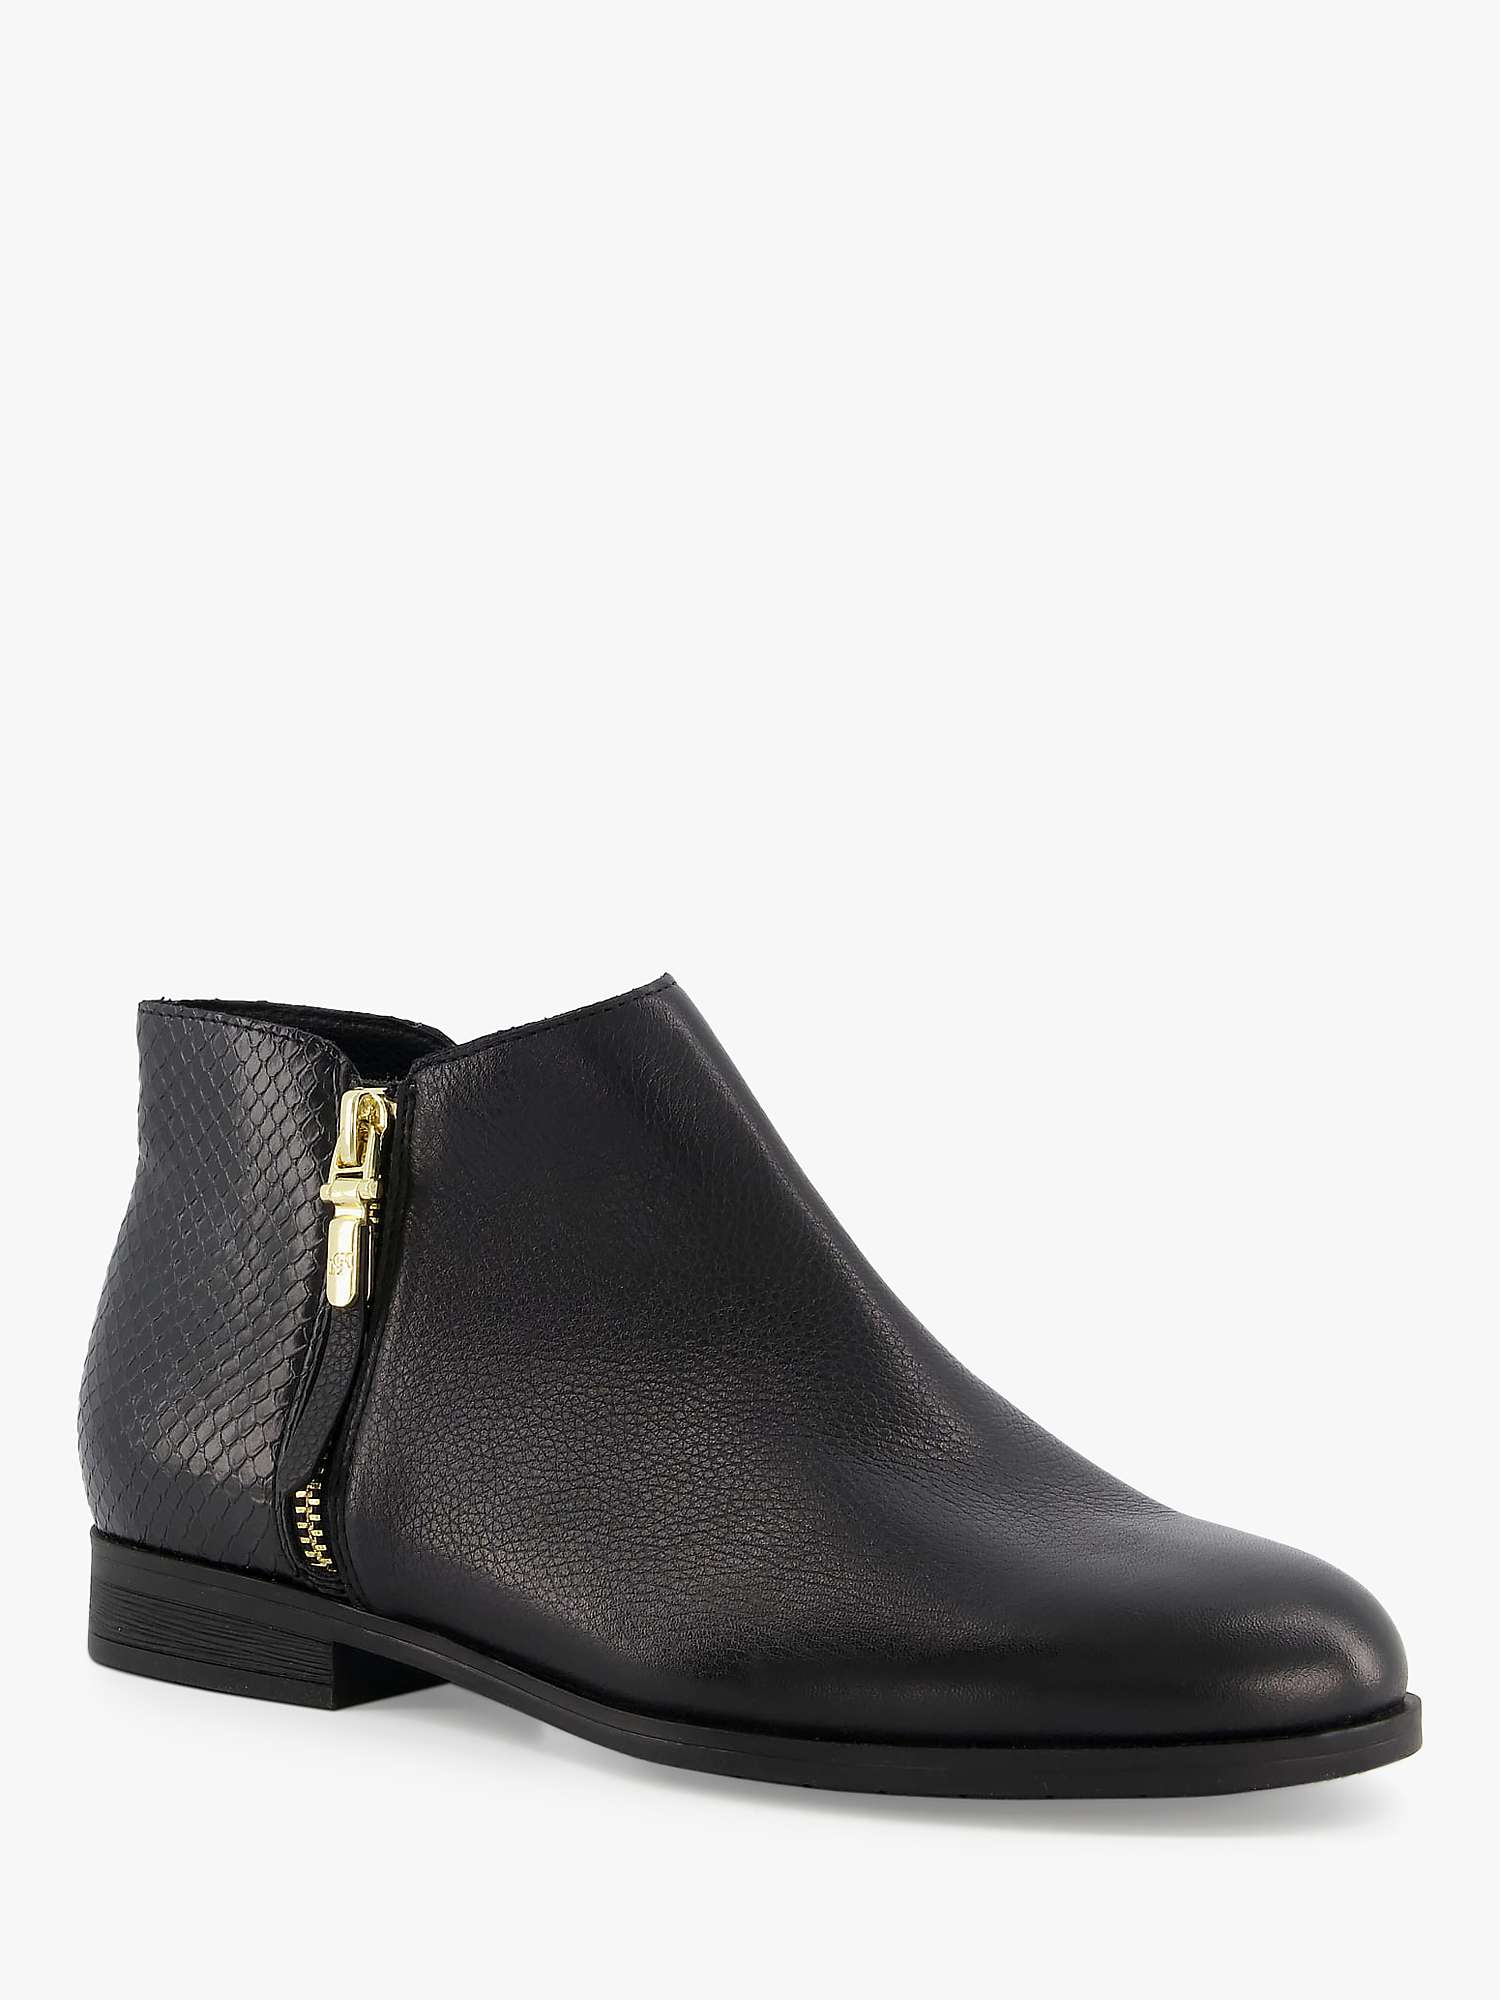 Dune Pandie Leather Zip Detail Shoe Boots, Black at John Lewis & Partners